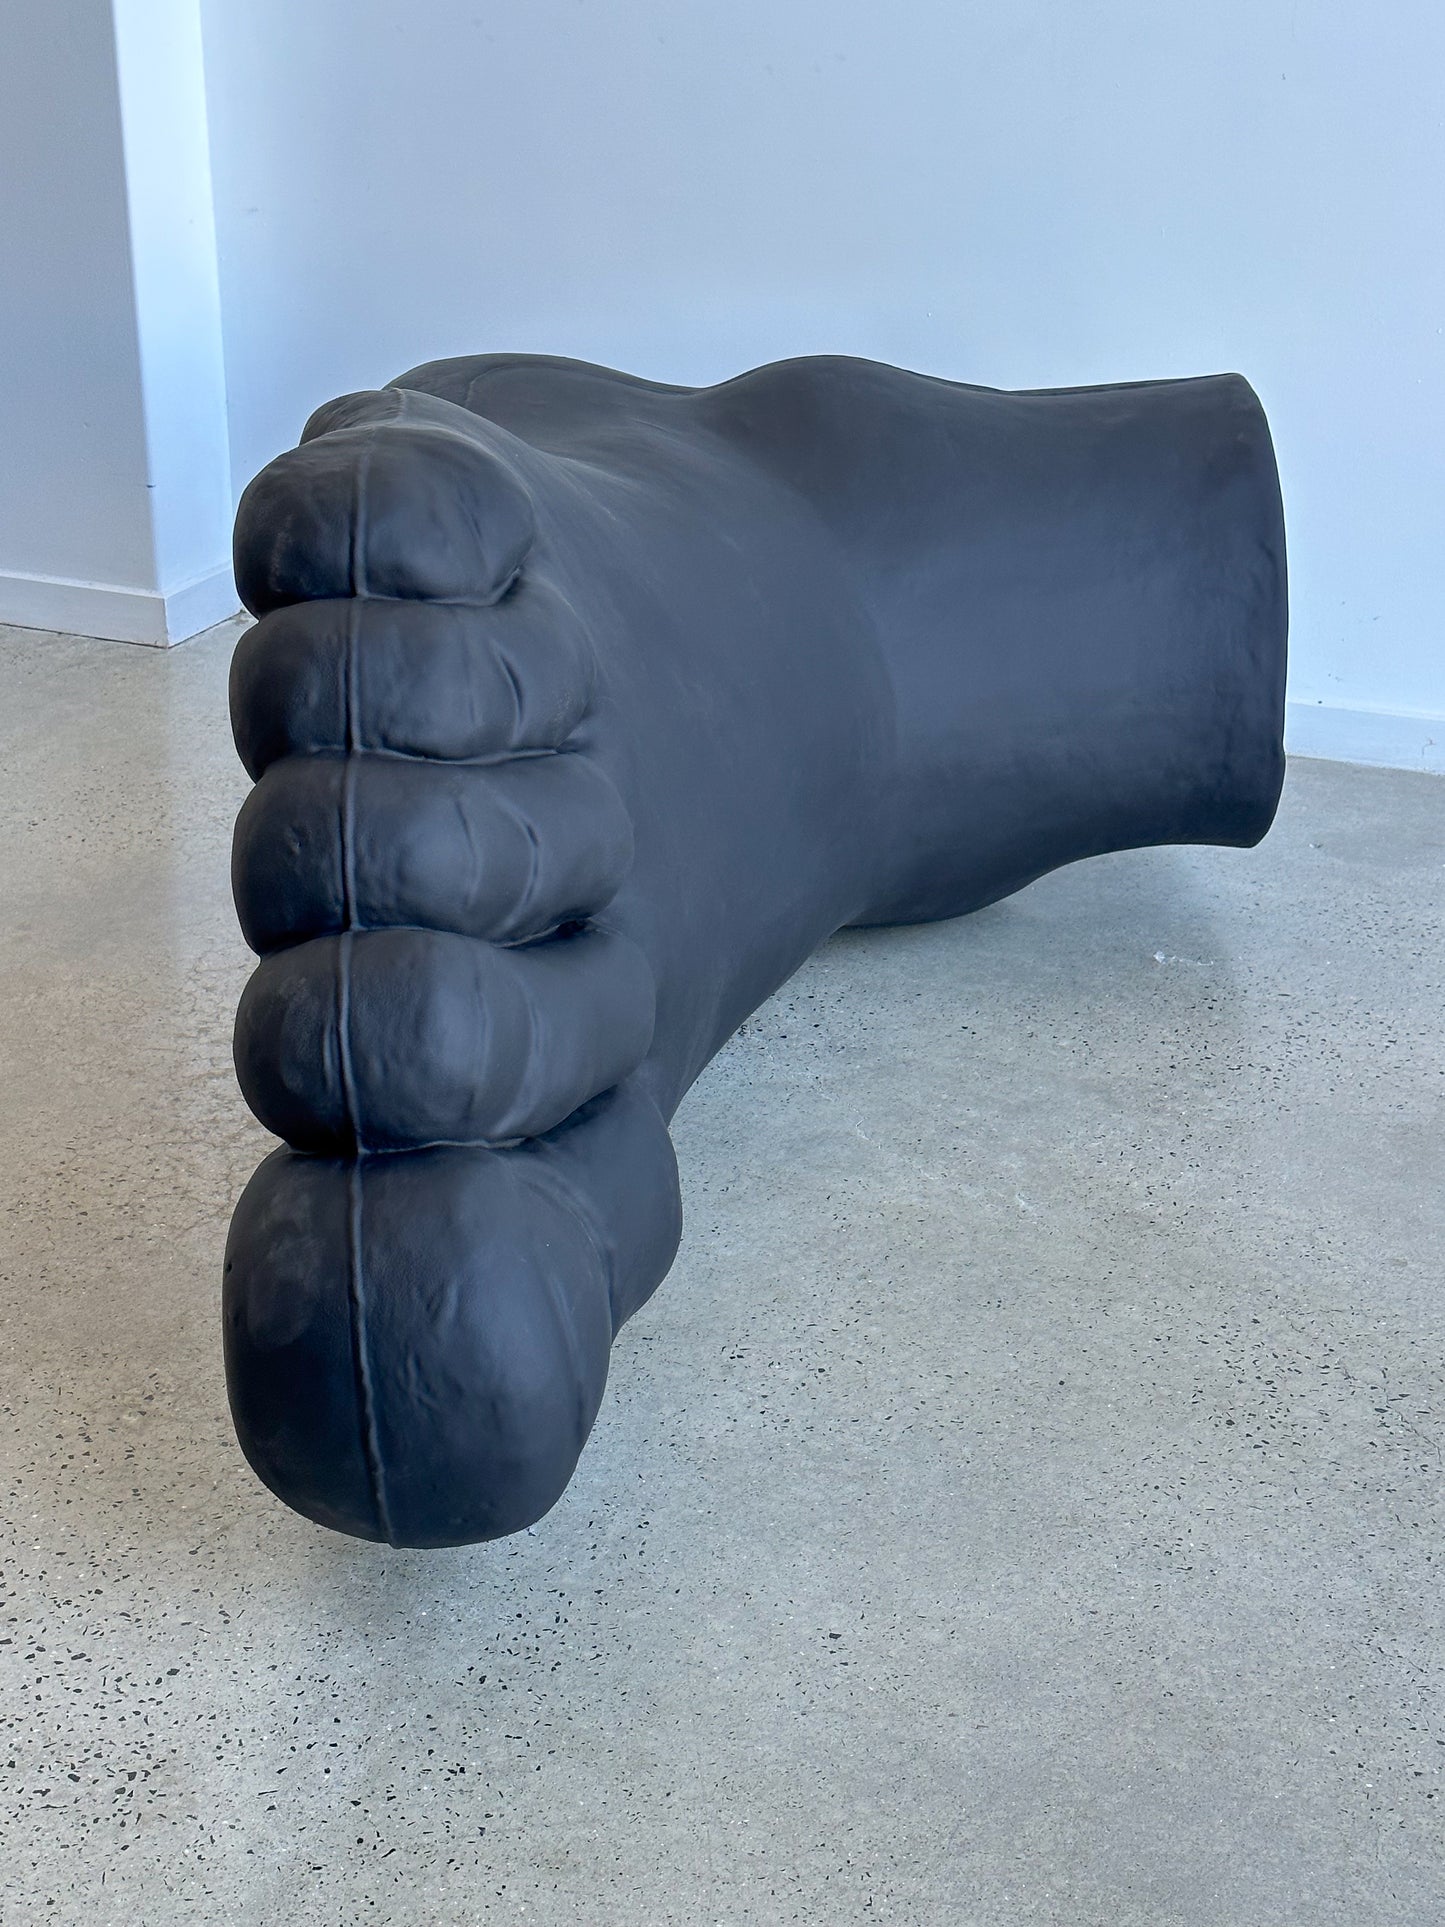 " UP 7 " Gaetano Pesce for B&B Italian Sculptural Furniture Rubber Foot 2000 Edition